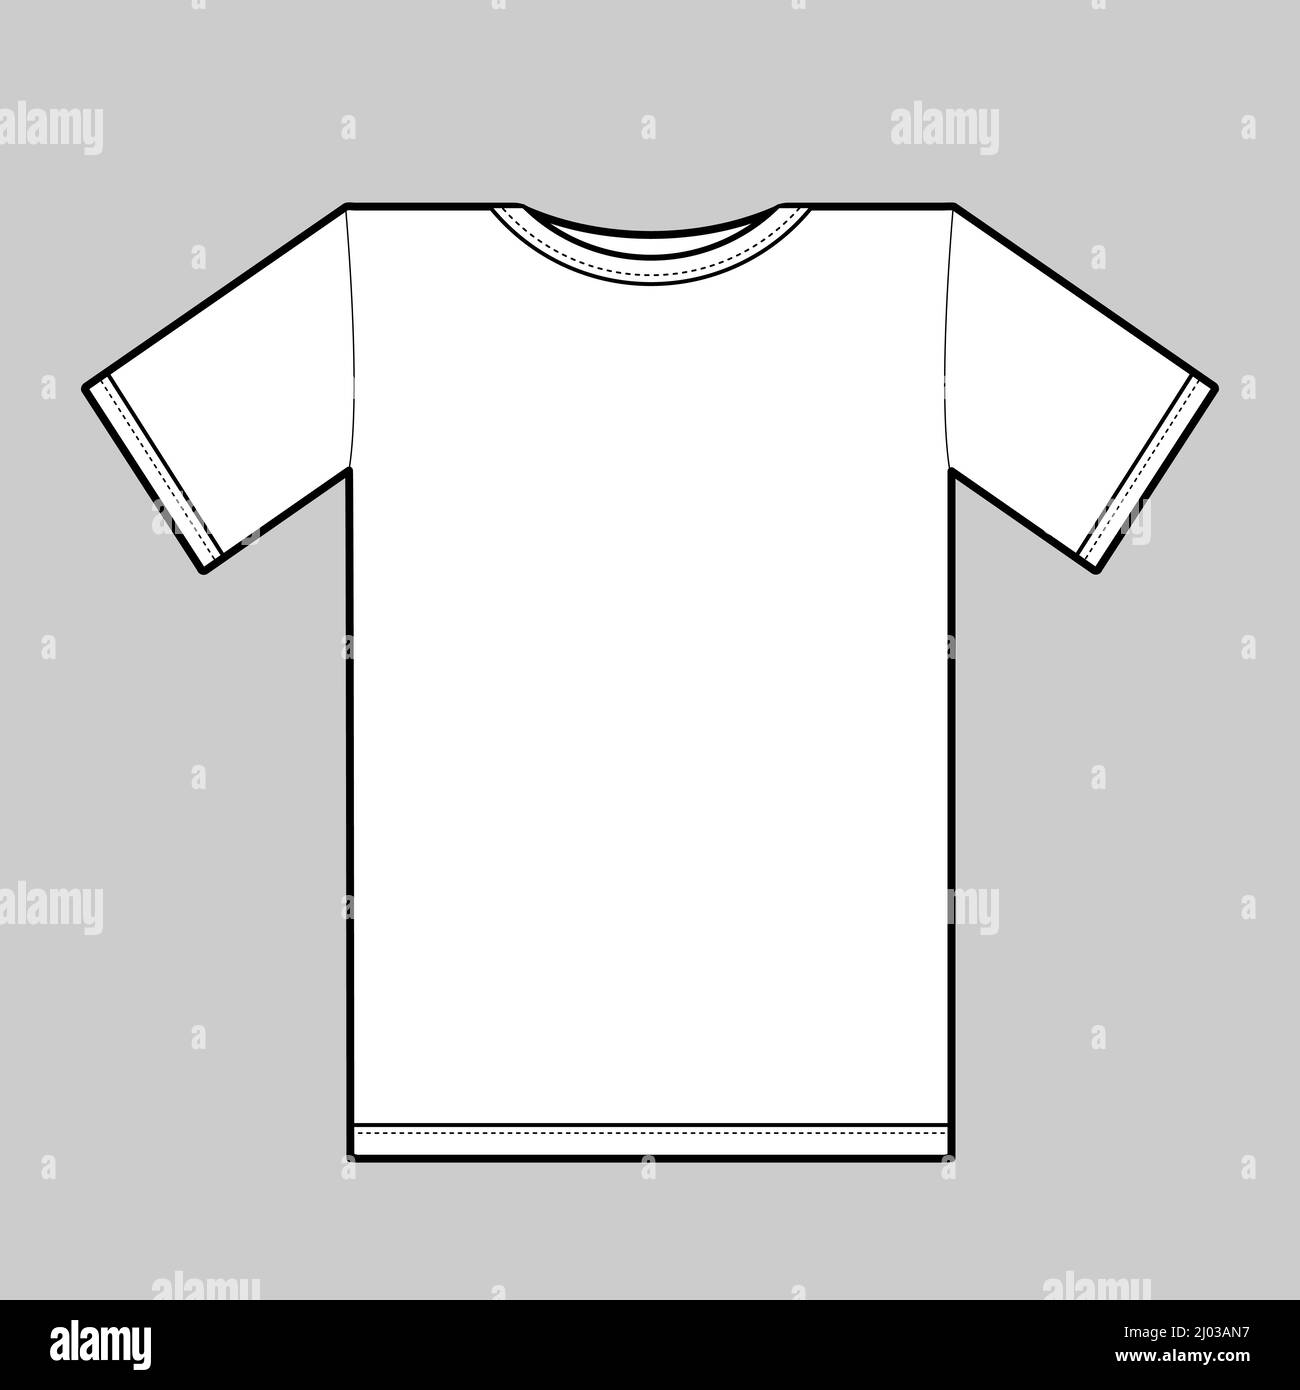 plain white t shirts template